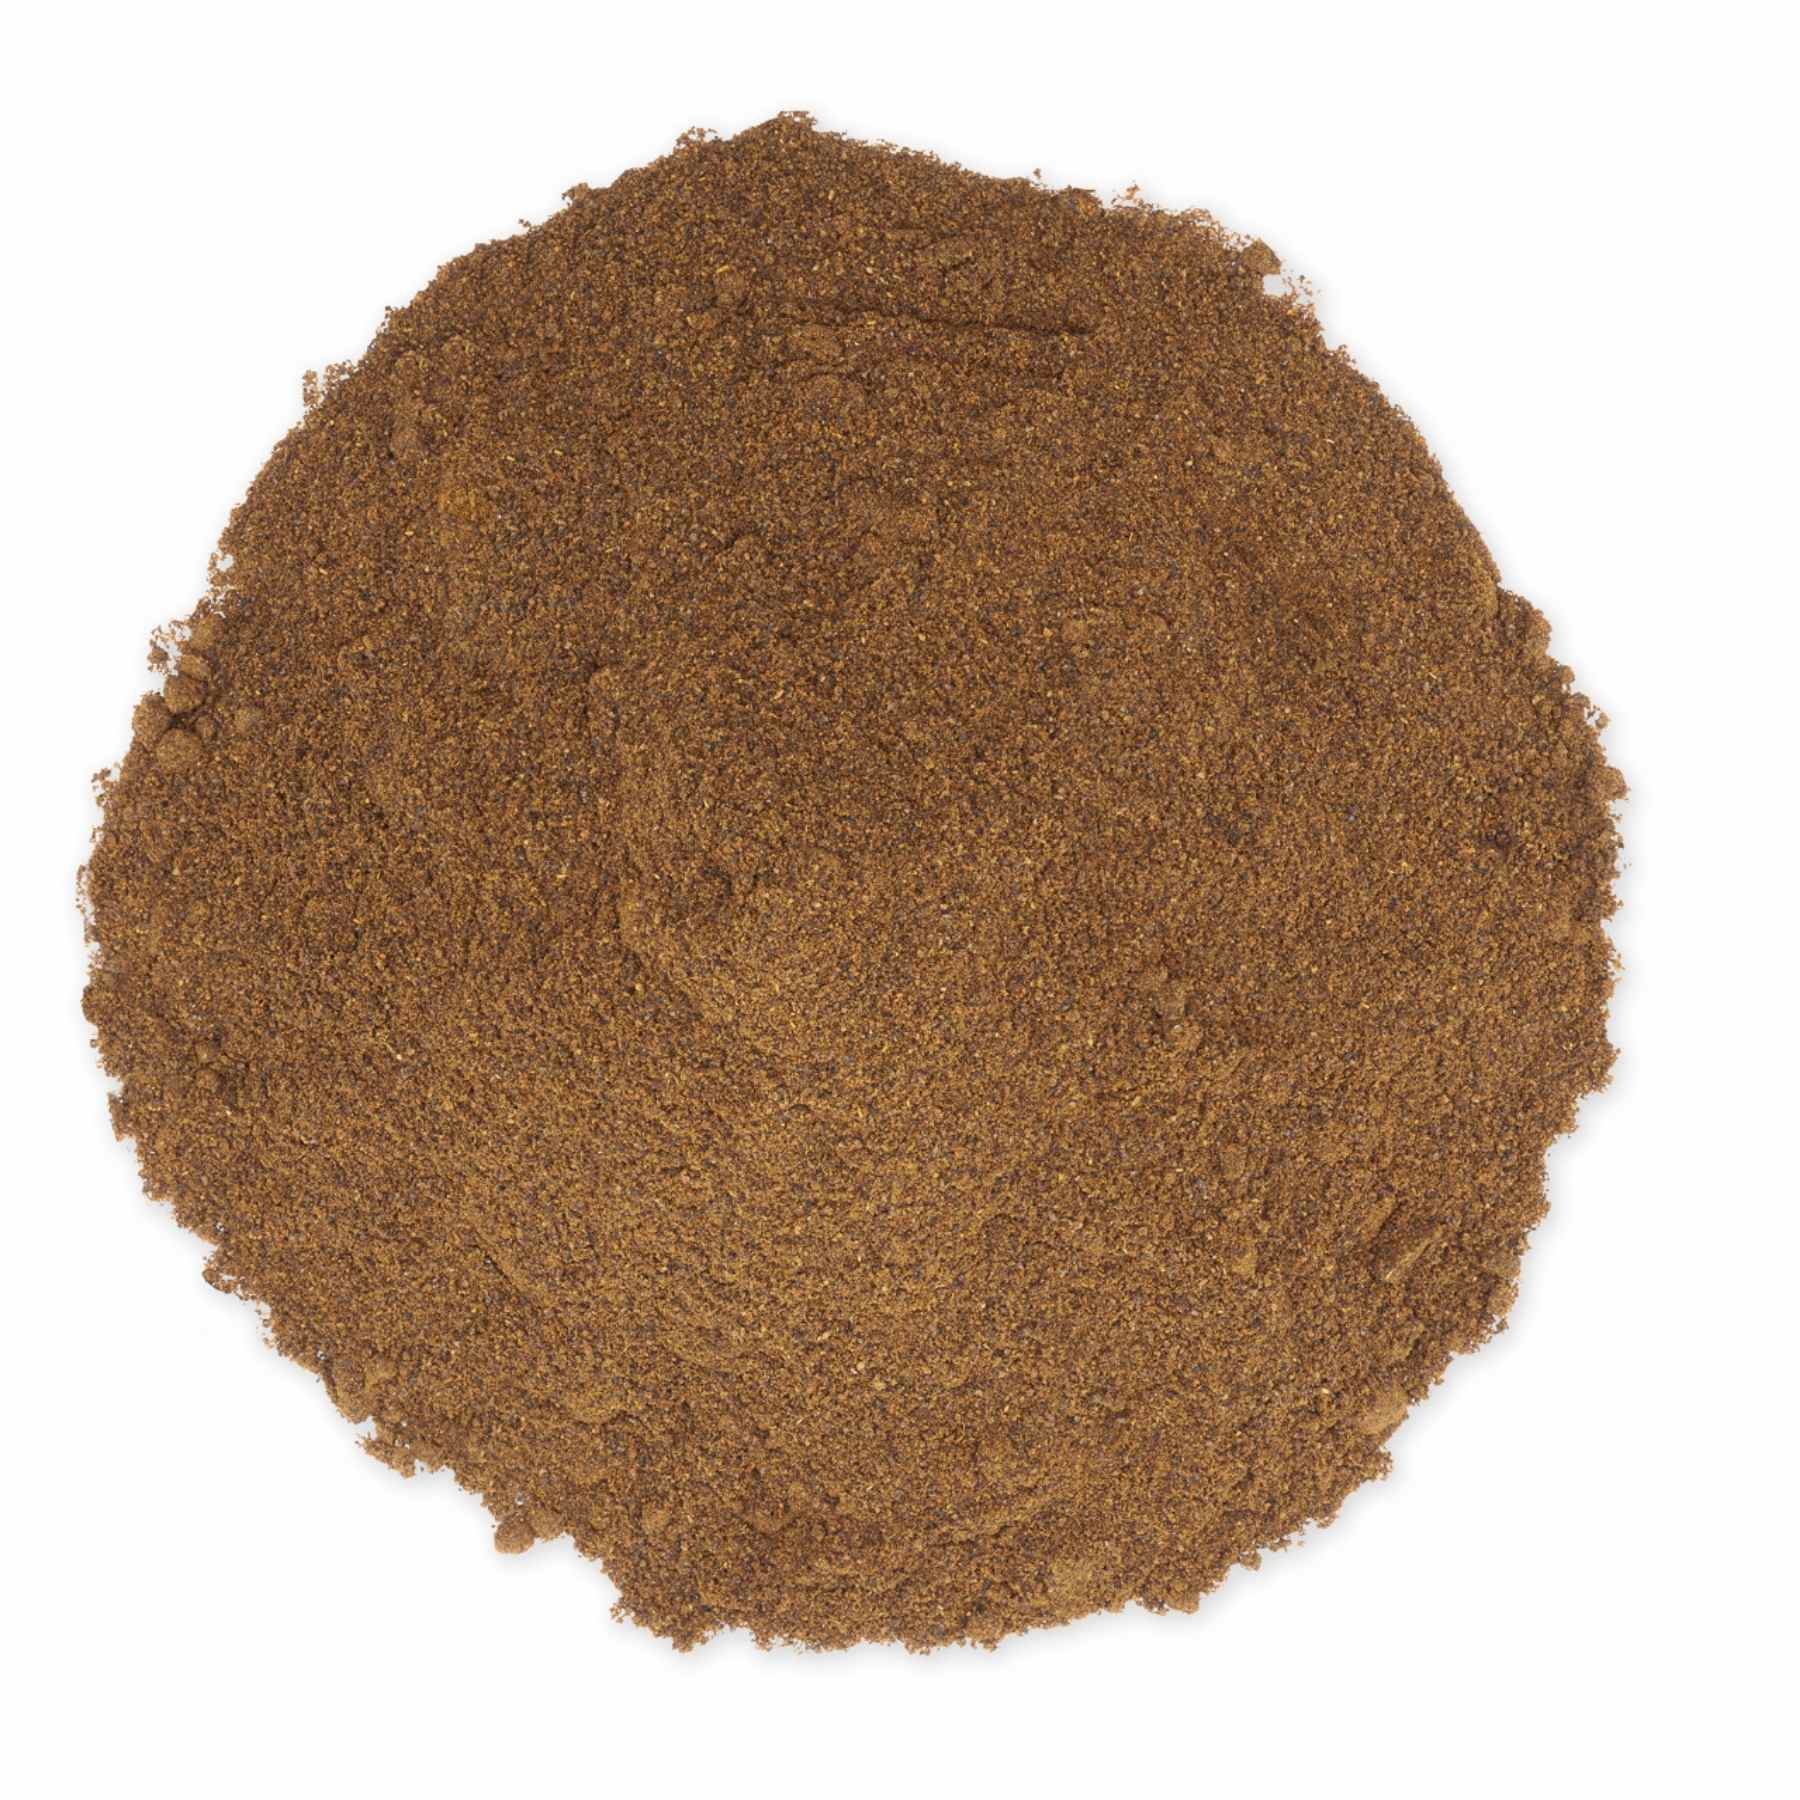 Chipotle Chile Powder Seasonings & Spices Slofoodgroup 2 oz 